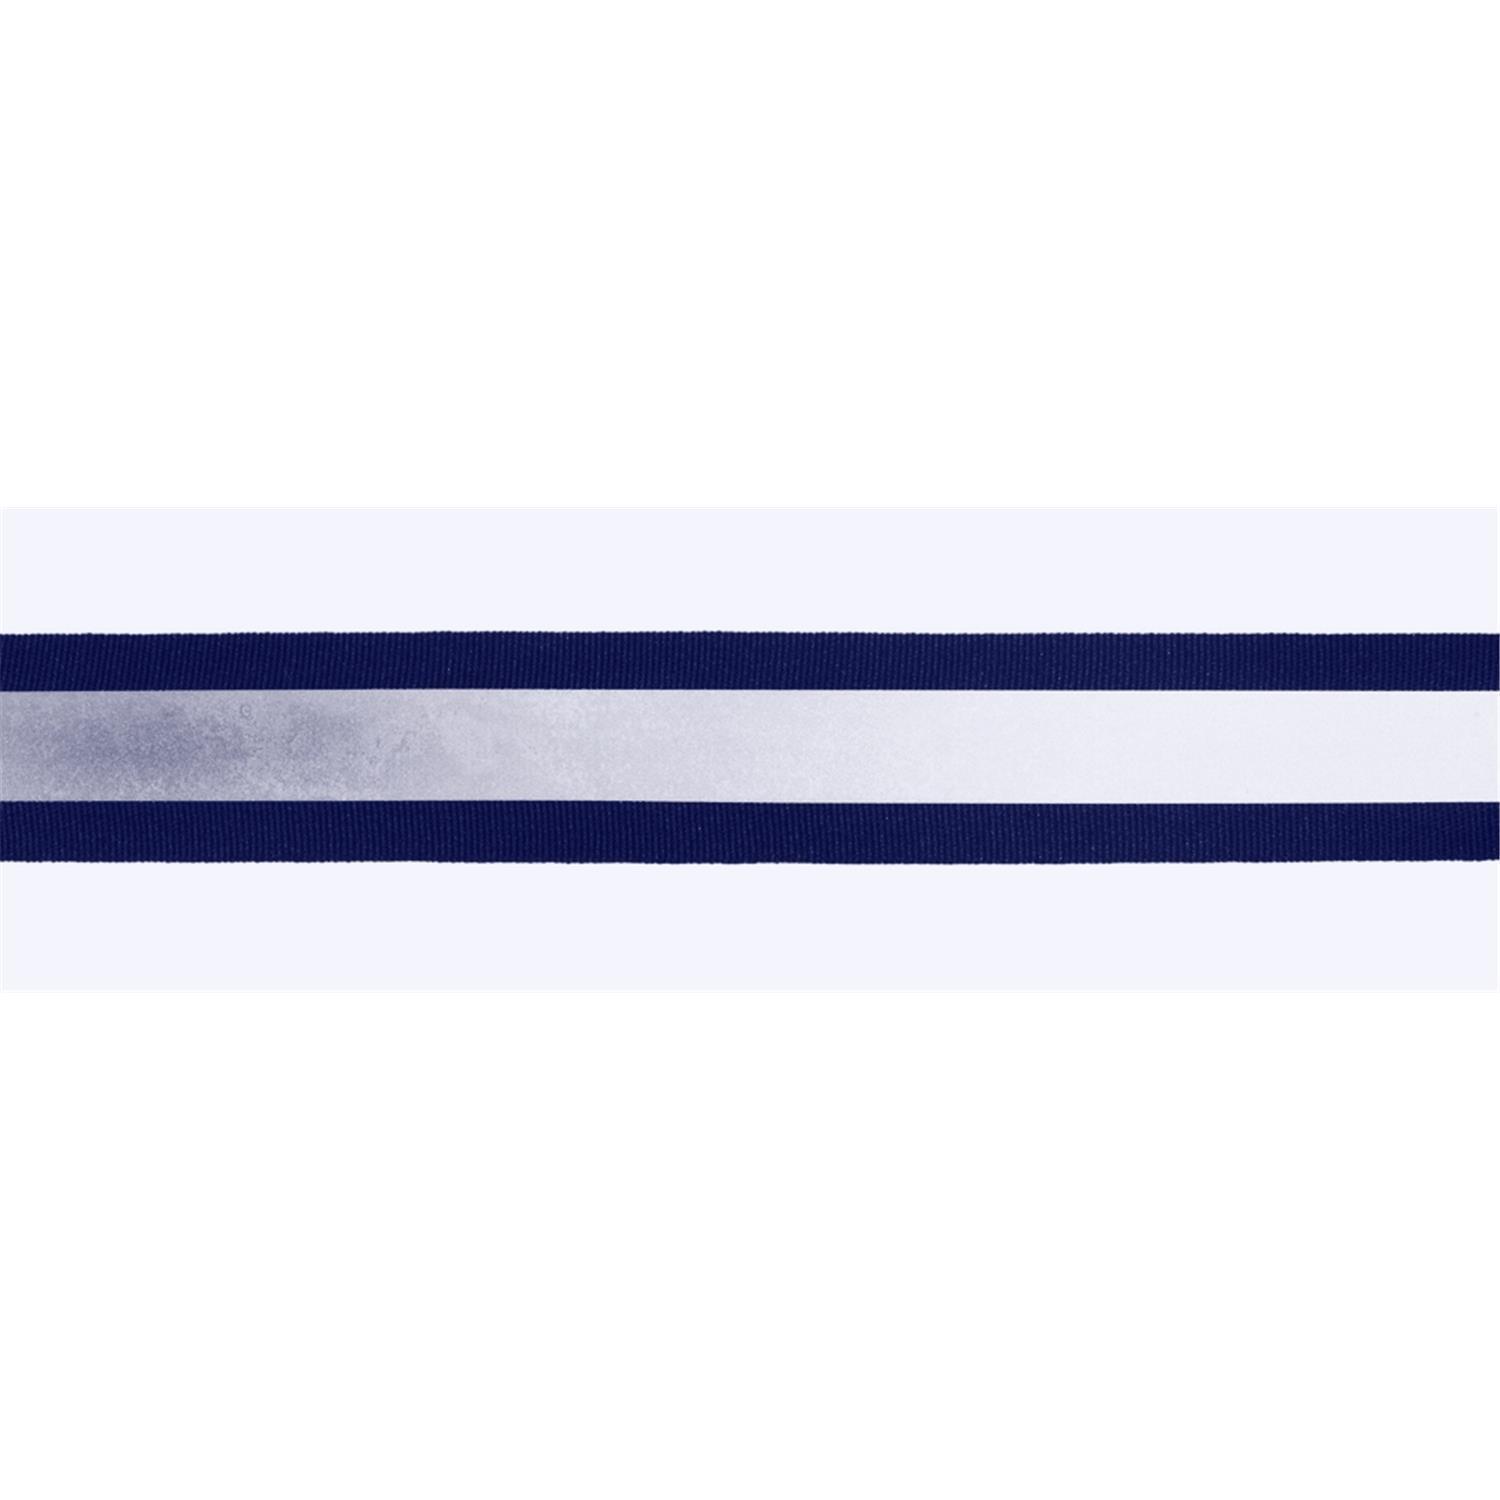 10 m Reflektor- / Leuchtband, 20mm breit Farbe: dunkelblau-silber